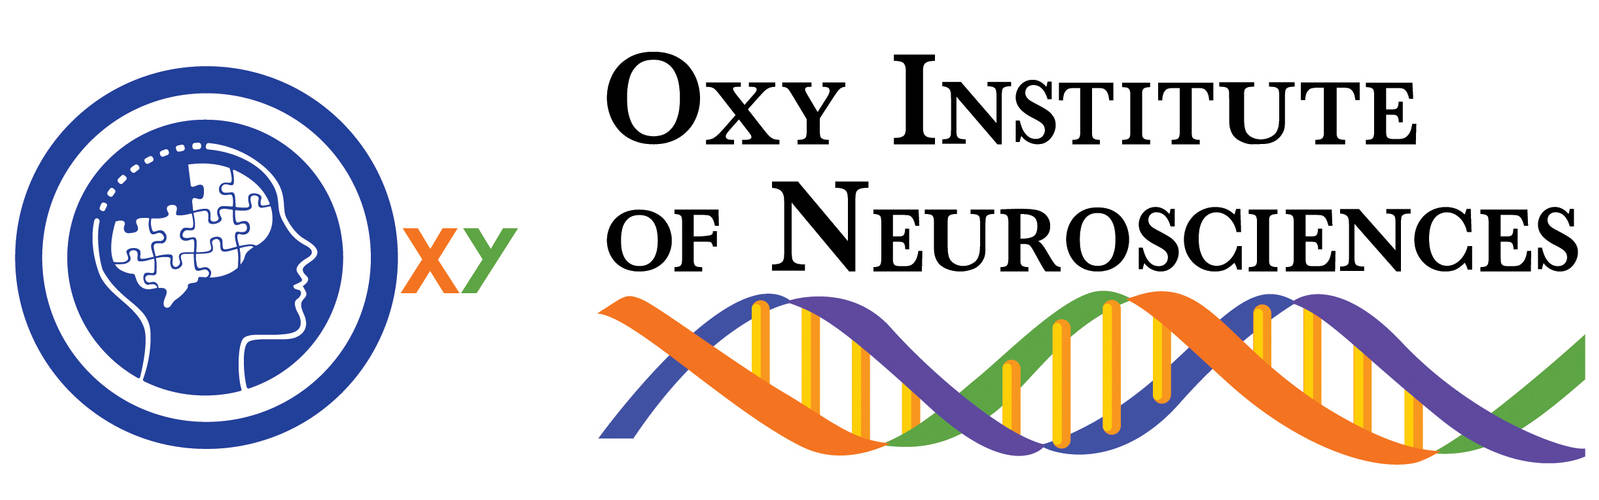 Oxy Institute